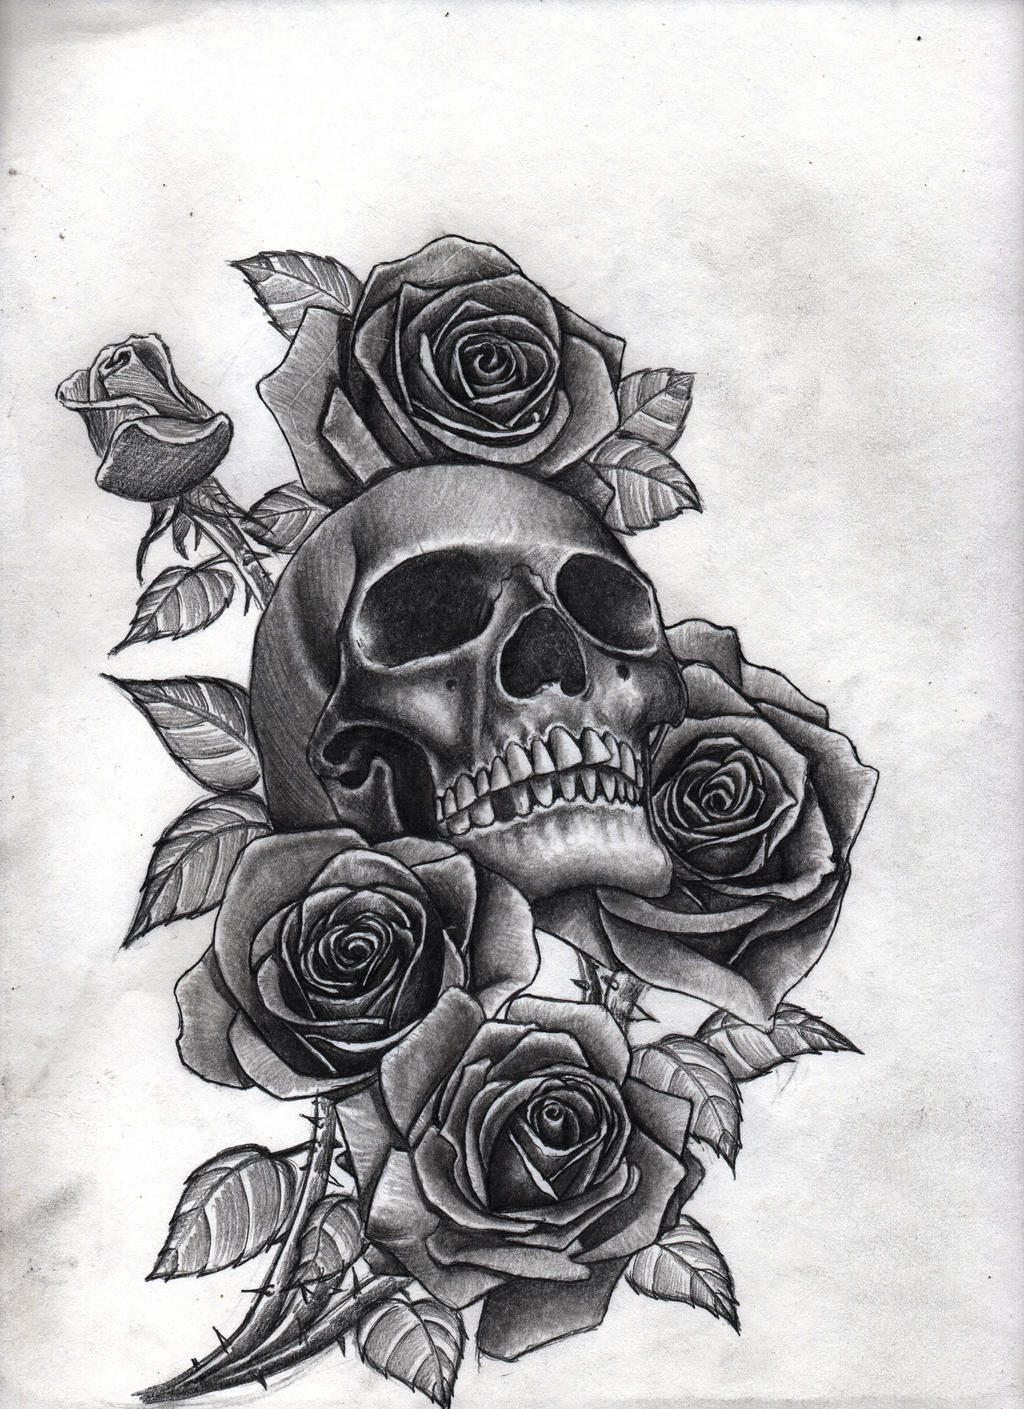 roses and skull by Bobby-castaldi-art on DeviantArt